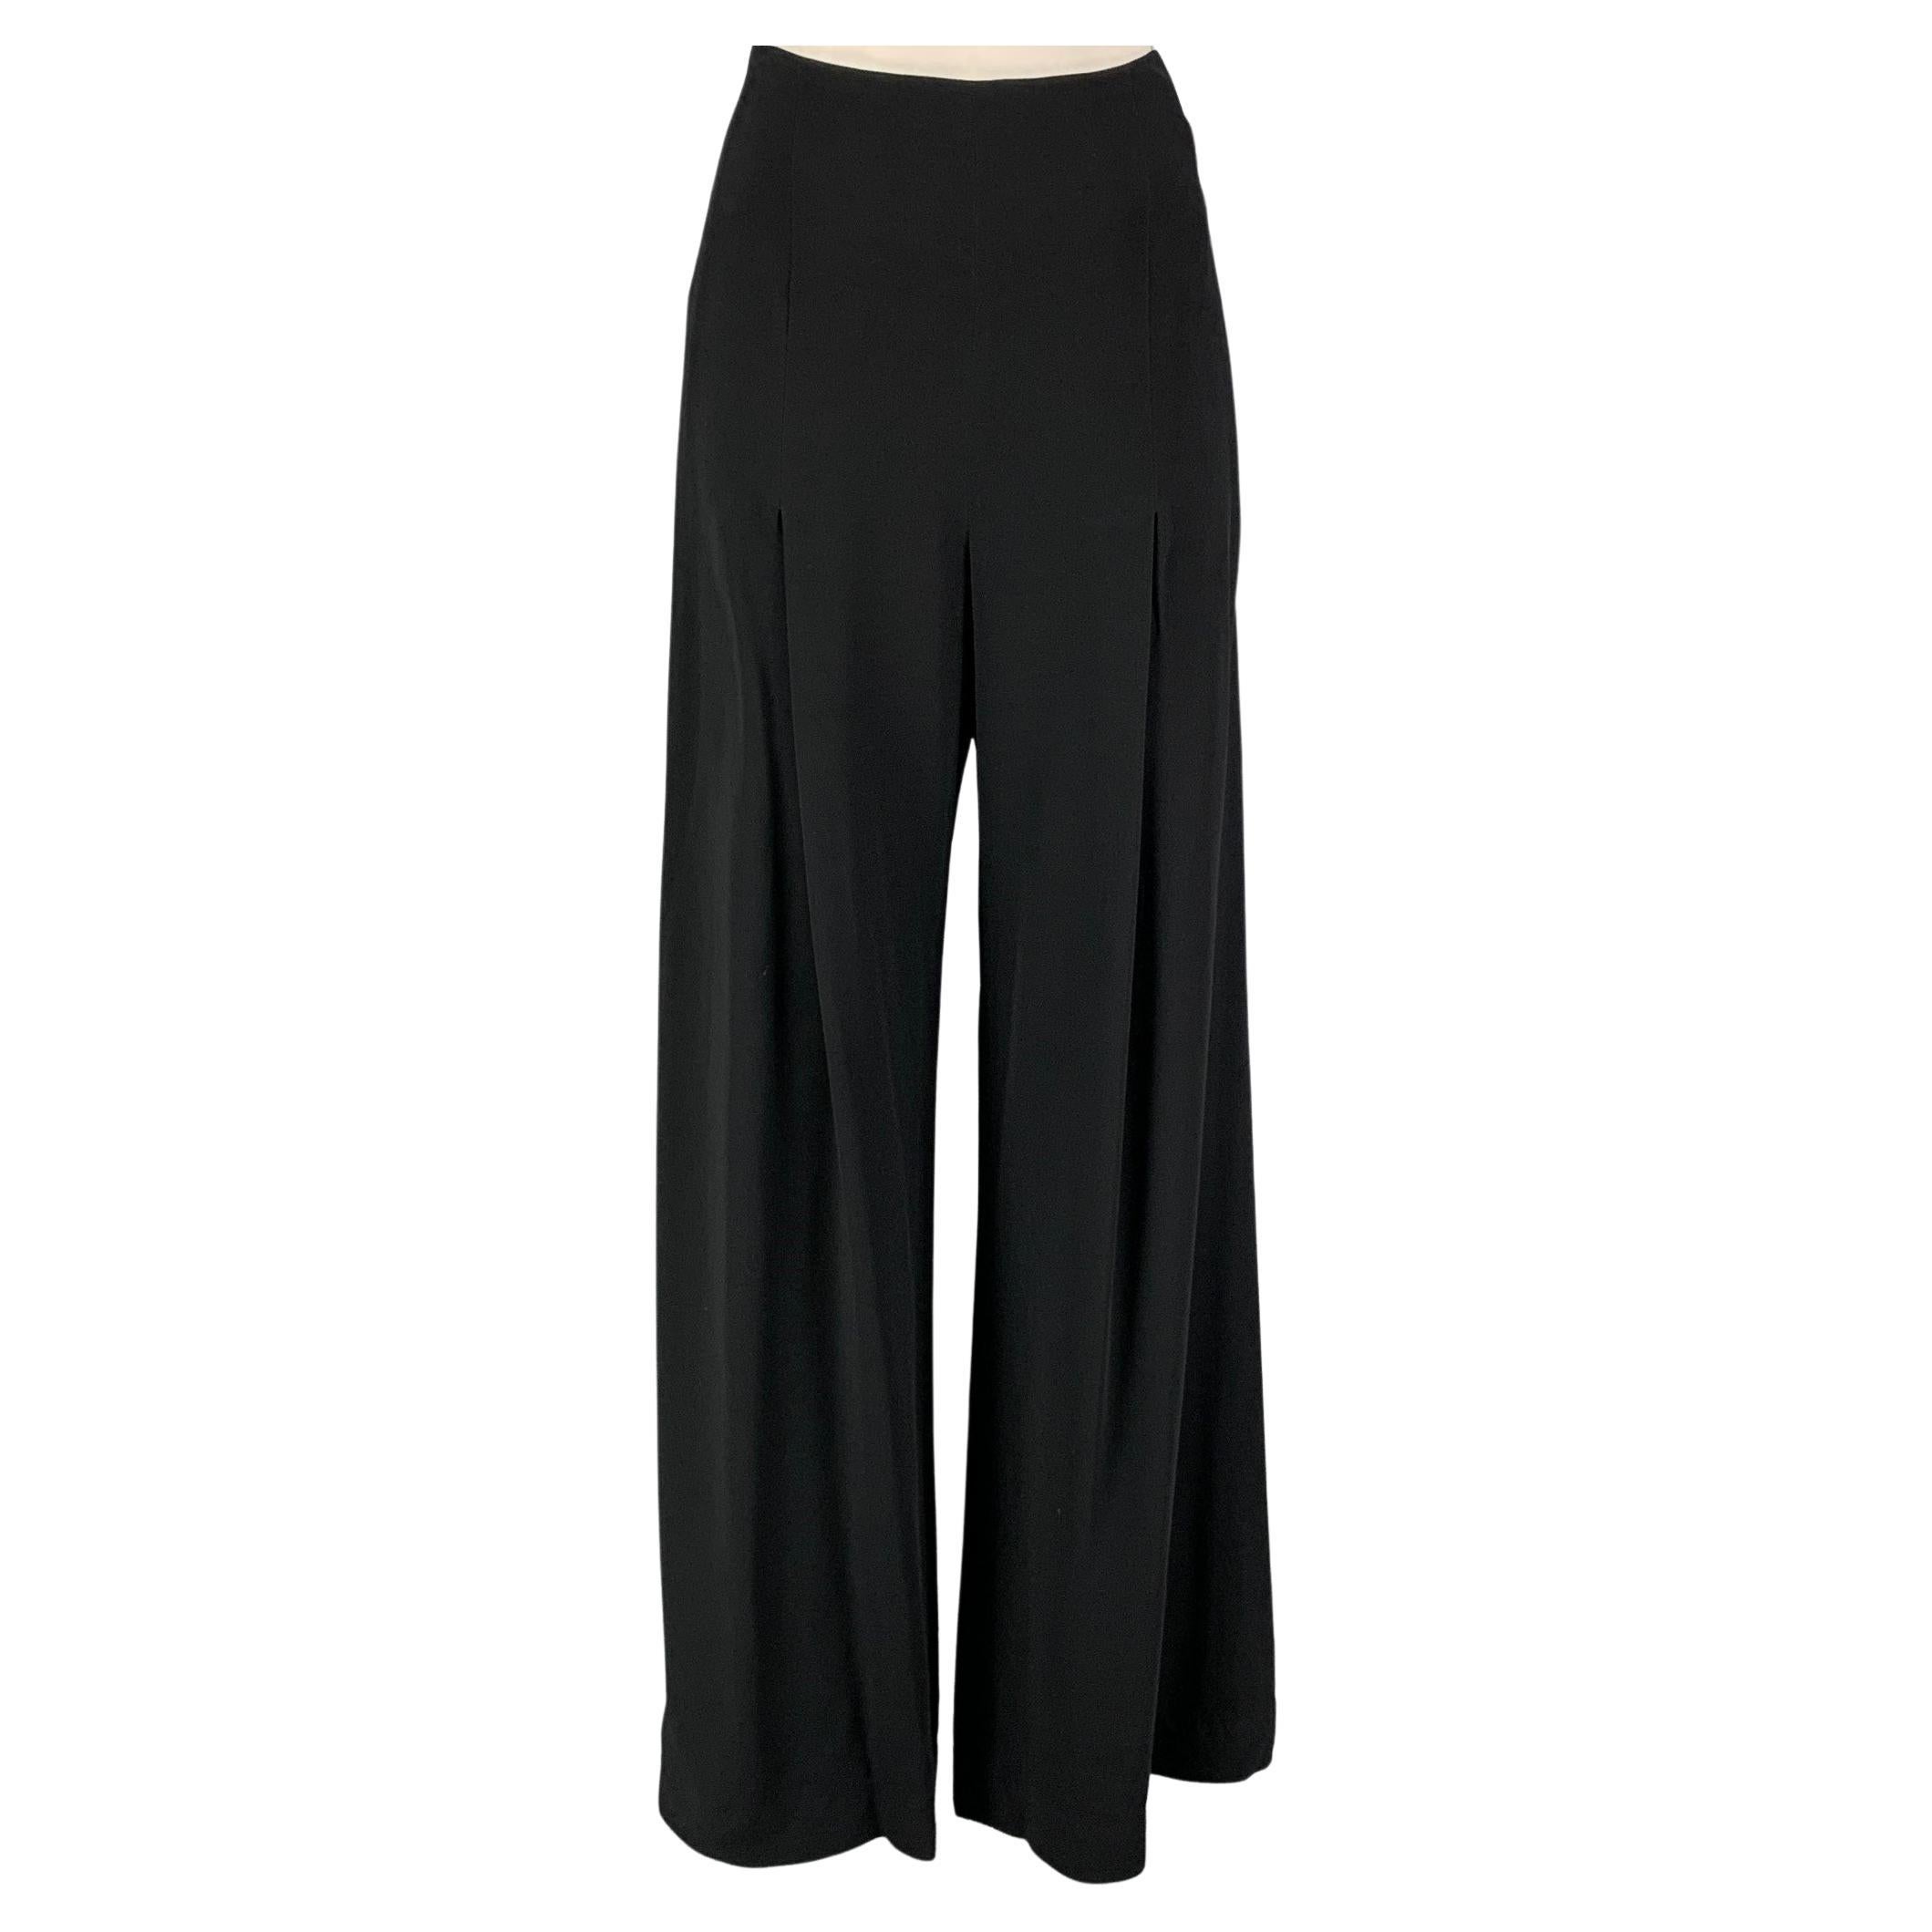 OSCAR DE LA RENTA Size 8 Black Viscose High Waisted Dress Pants